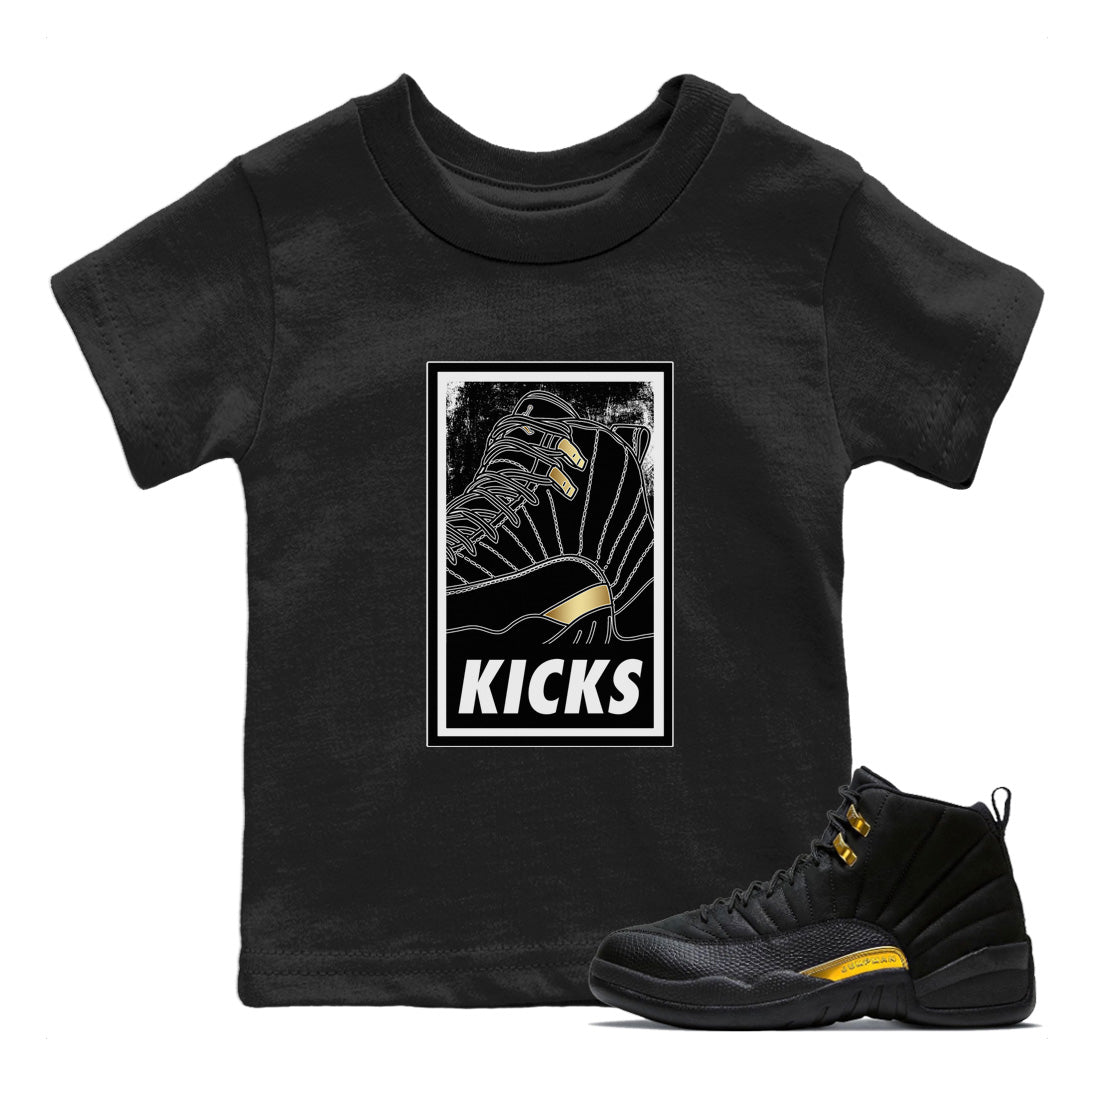 Jordan 12 Black Taxi Sneaker Match Tees KICKS Sneaker Tees Jordan 12 Black Taxi Sneaker Release Tees Kids Shirts